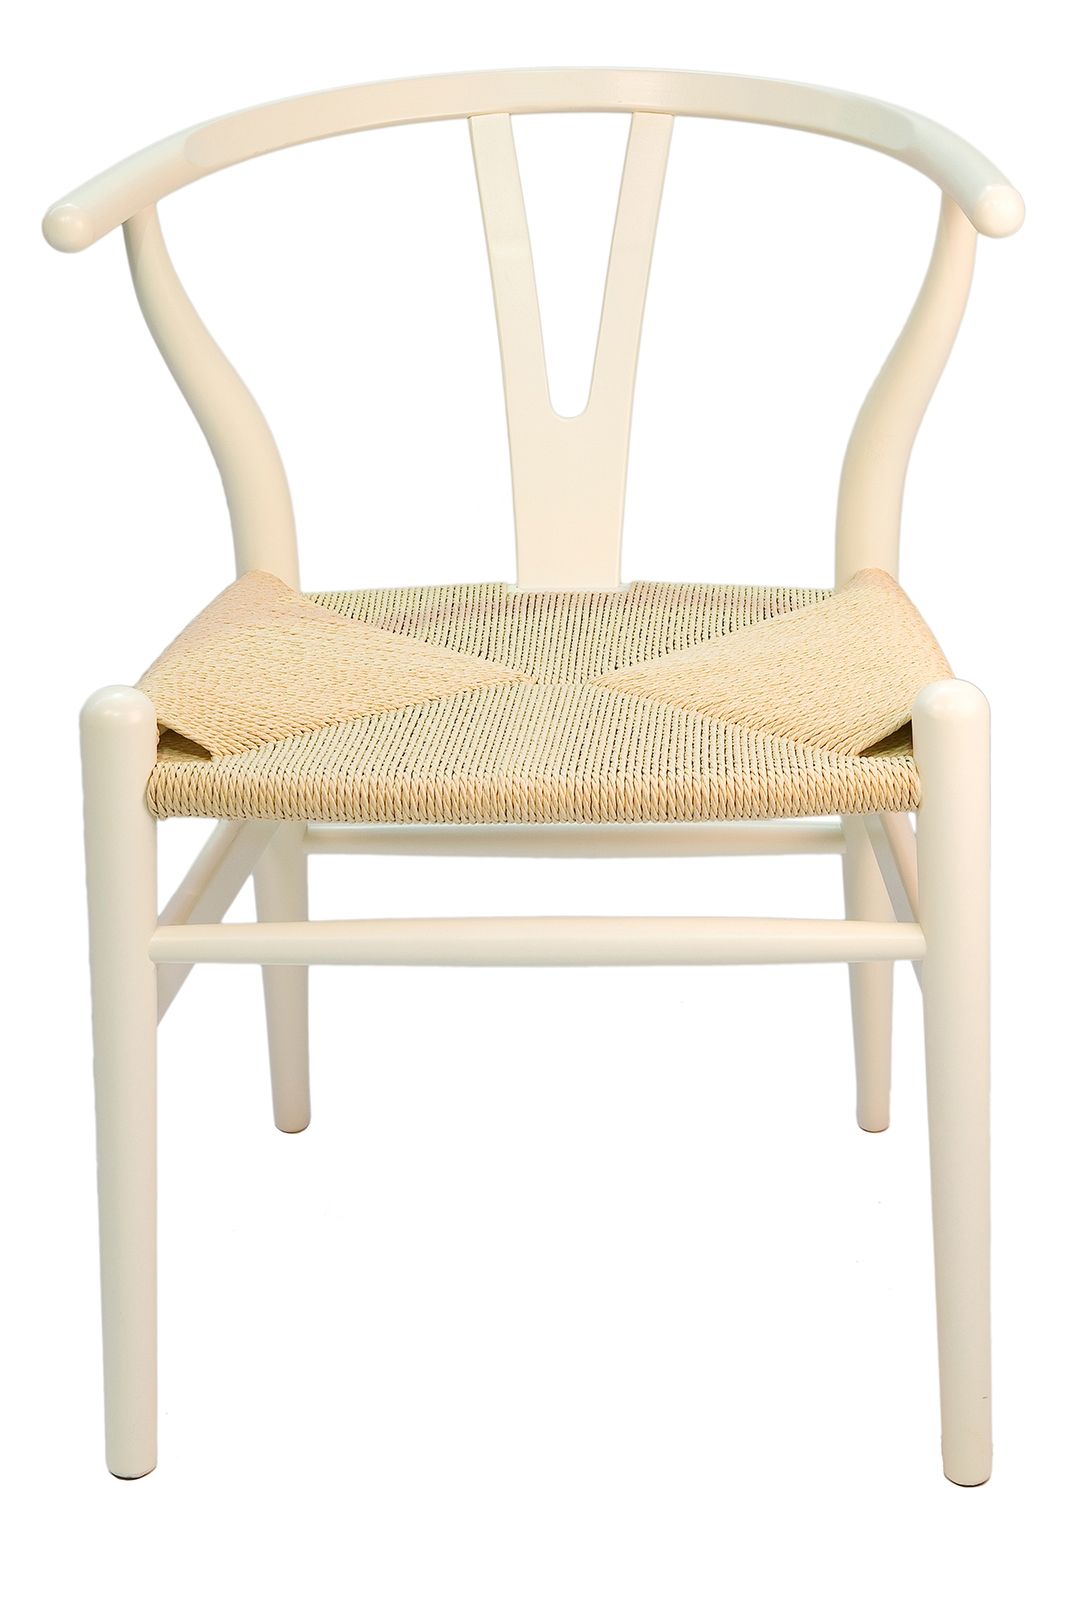 Replica Hans Wegner Wishbone Chair | Bone White Frame & Natural Seat